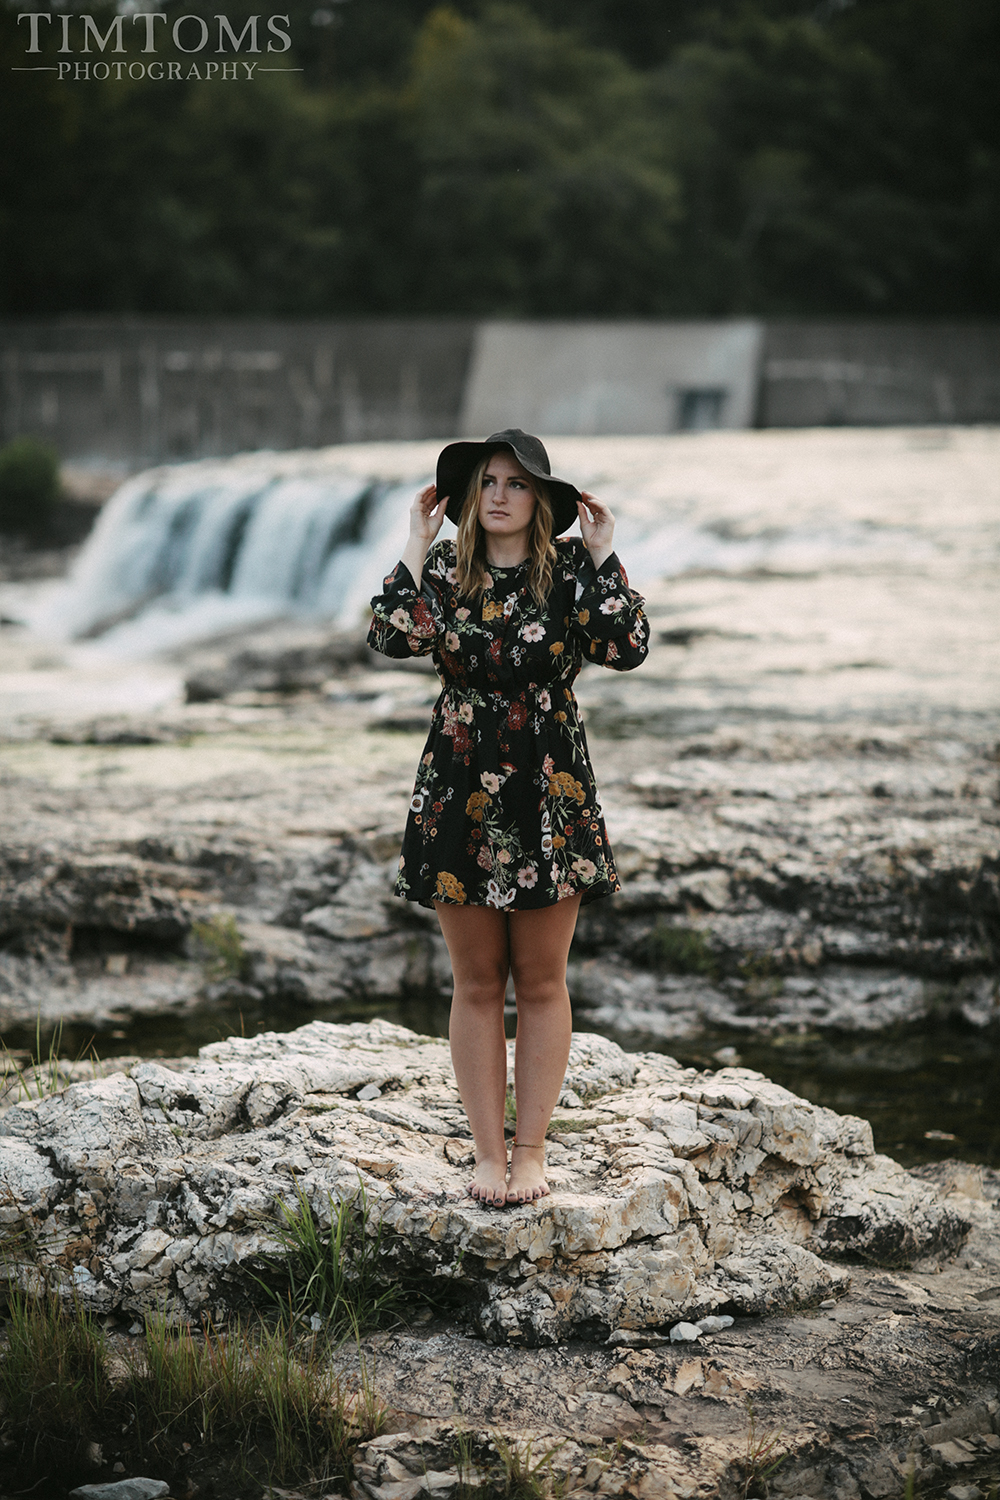  senior picture photographer joplin missouri the falls grand falls floral dress 